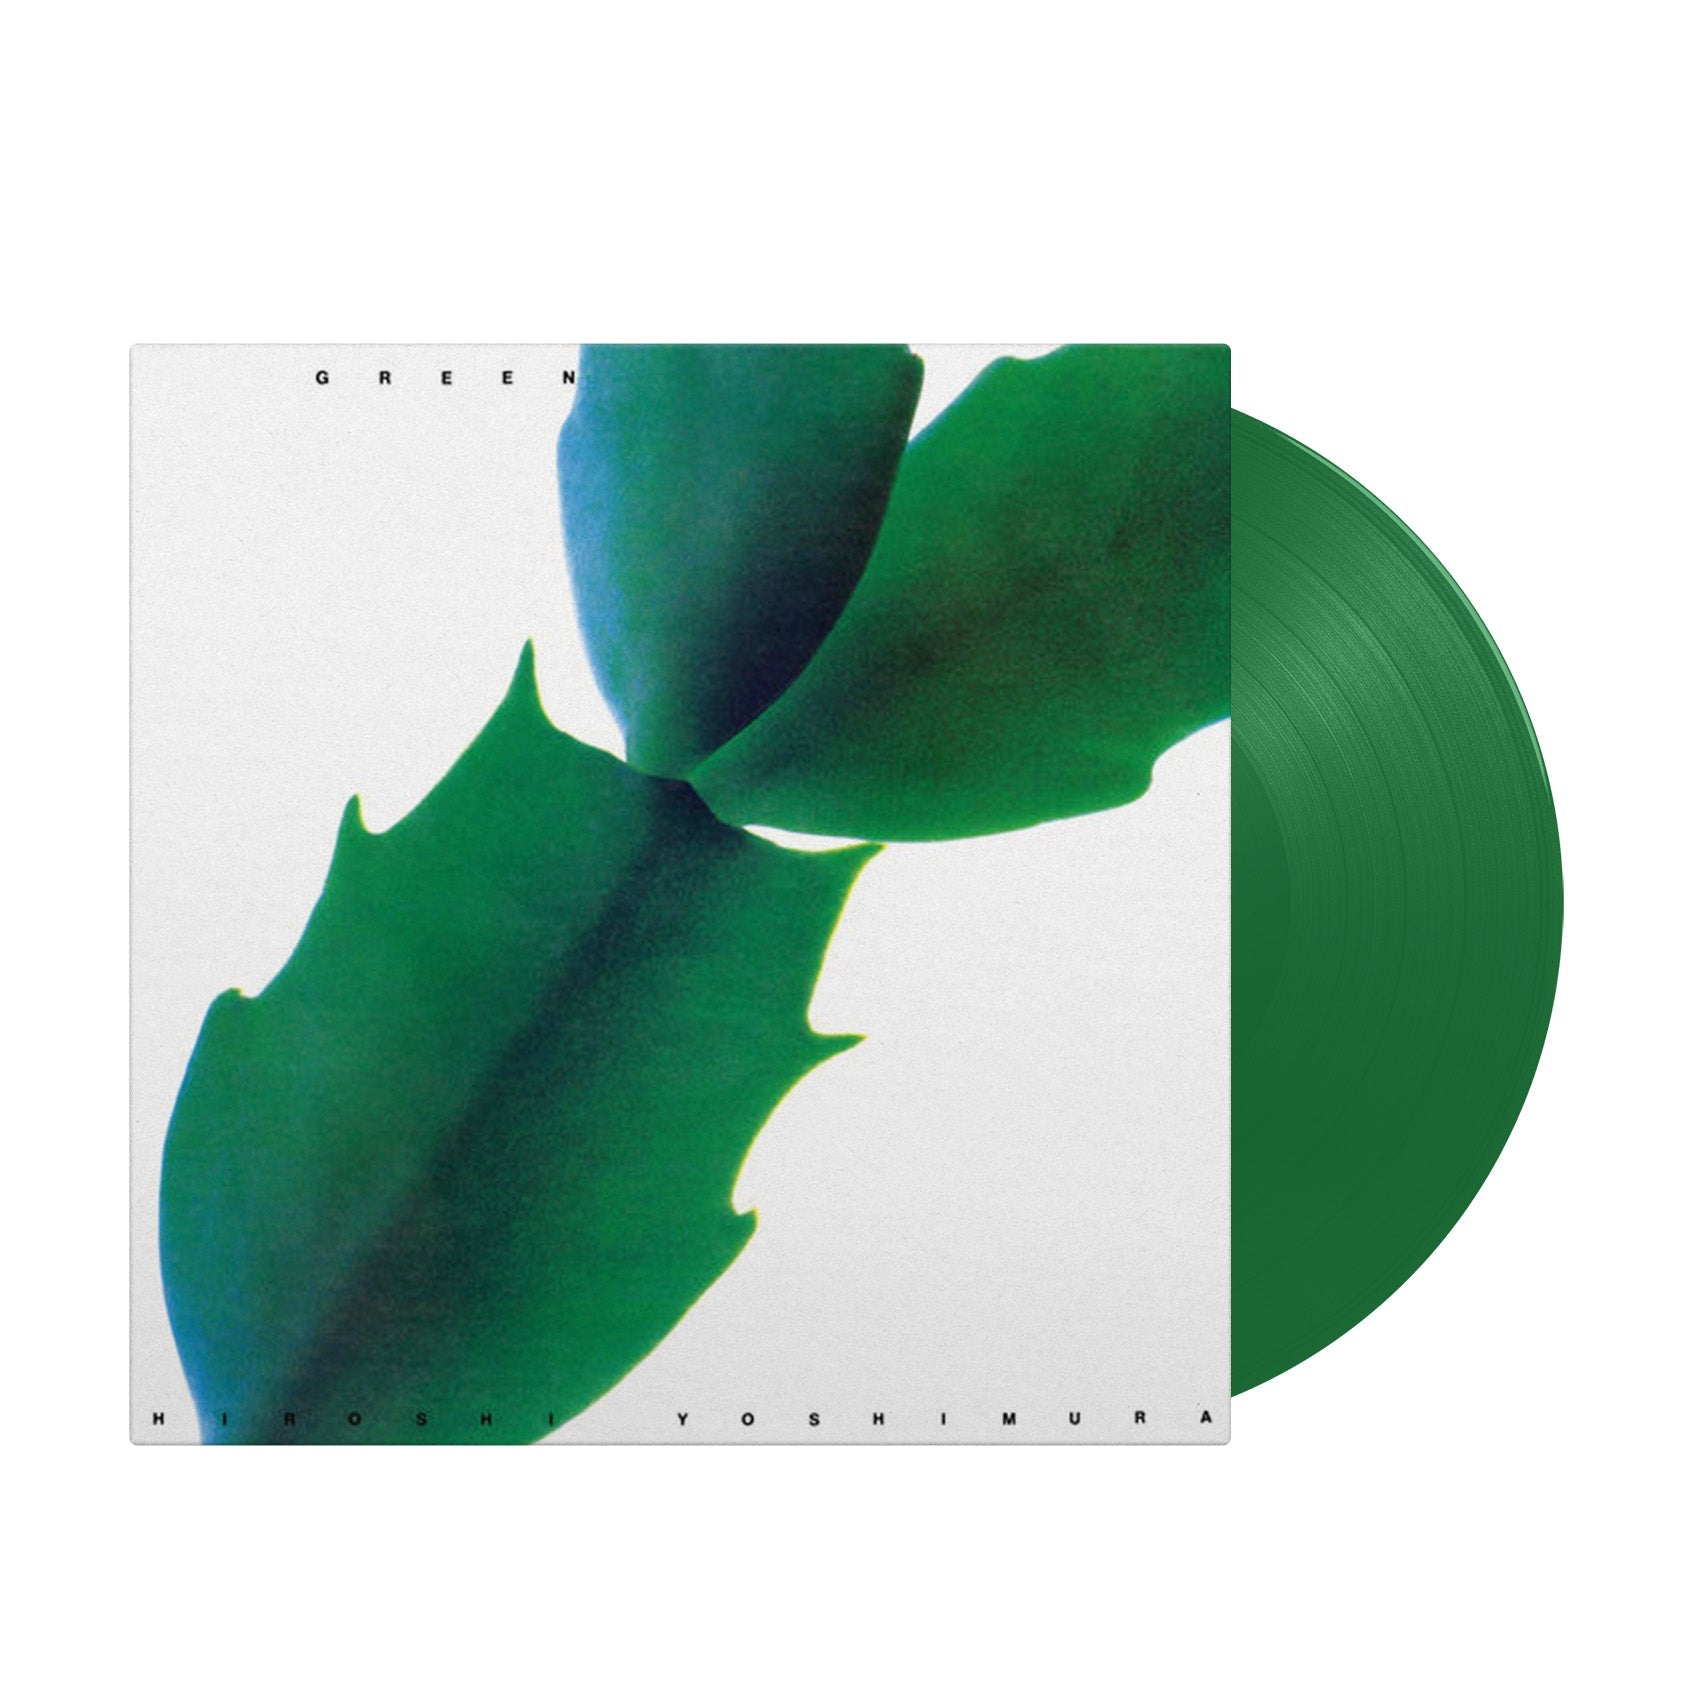 Hiroshi Yoshimura - Green - Inner Ocean Records